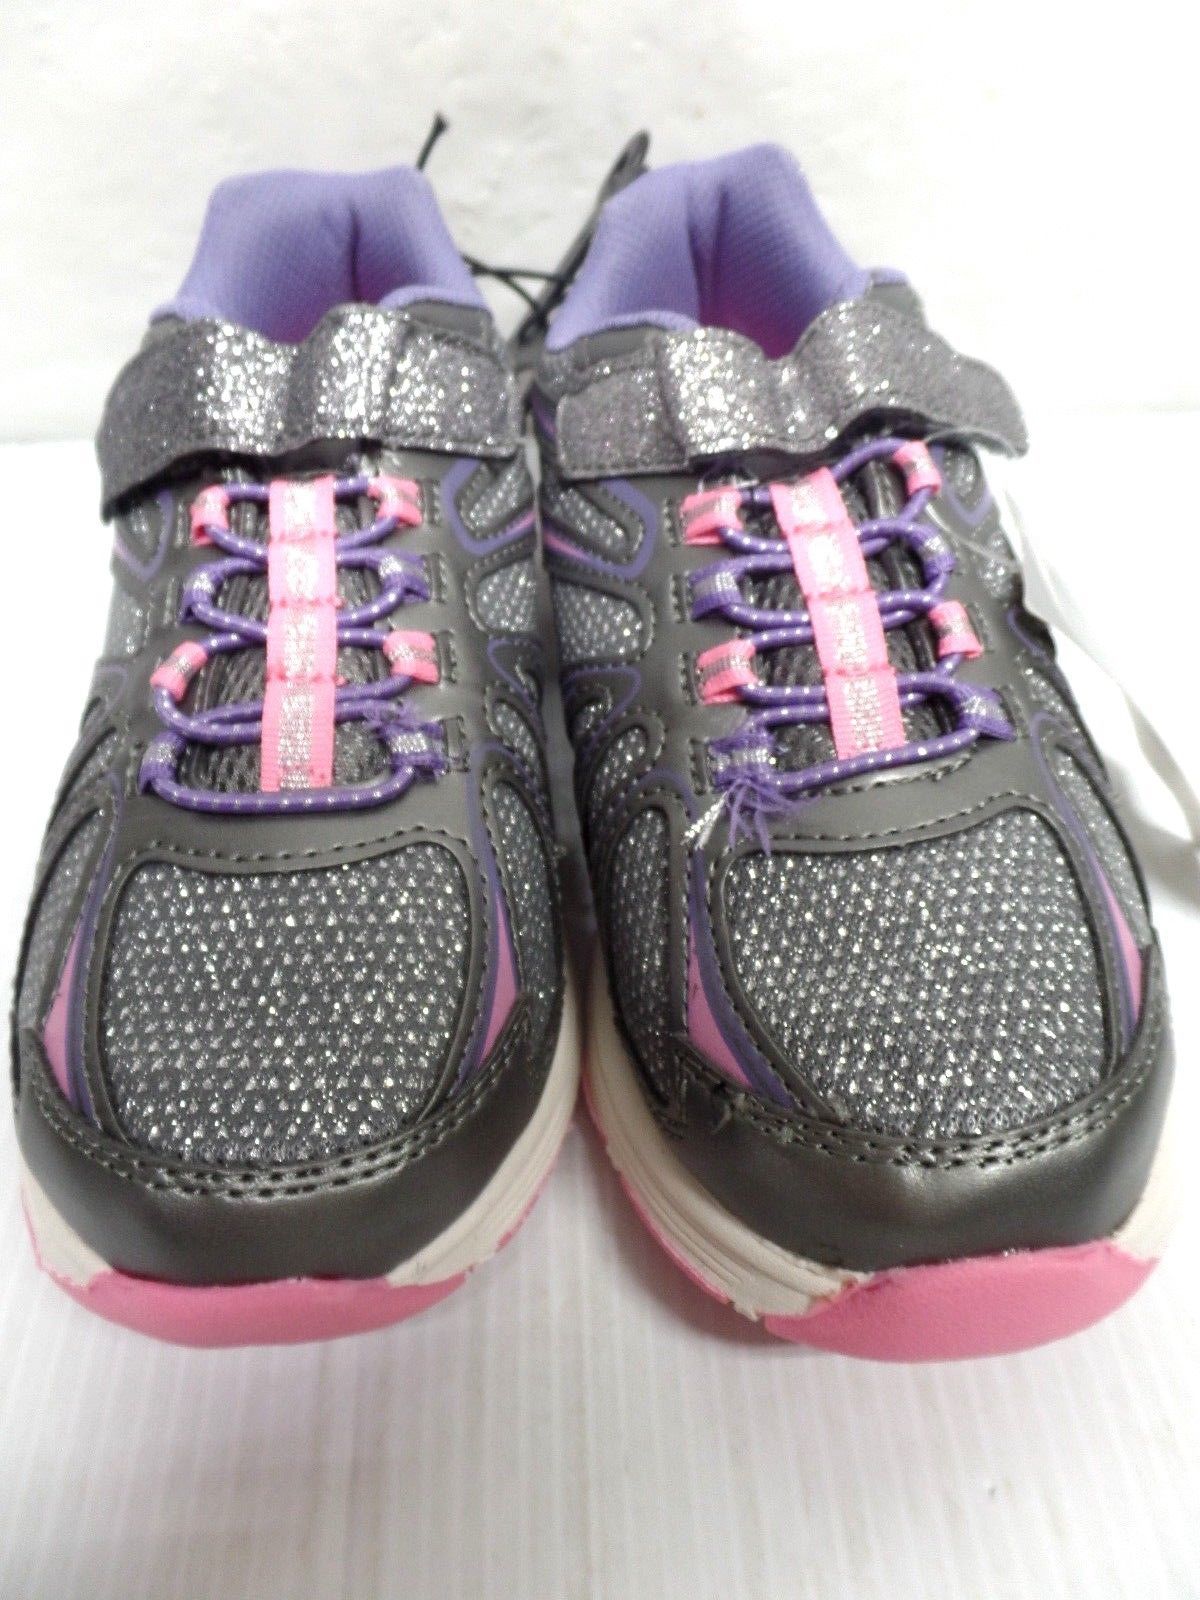 DANSKIN NOW Lightweight Athletic Shoes Walking Sneakers - Girls' Shoes